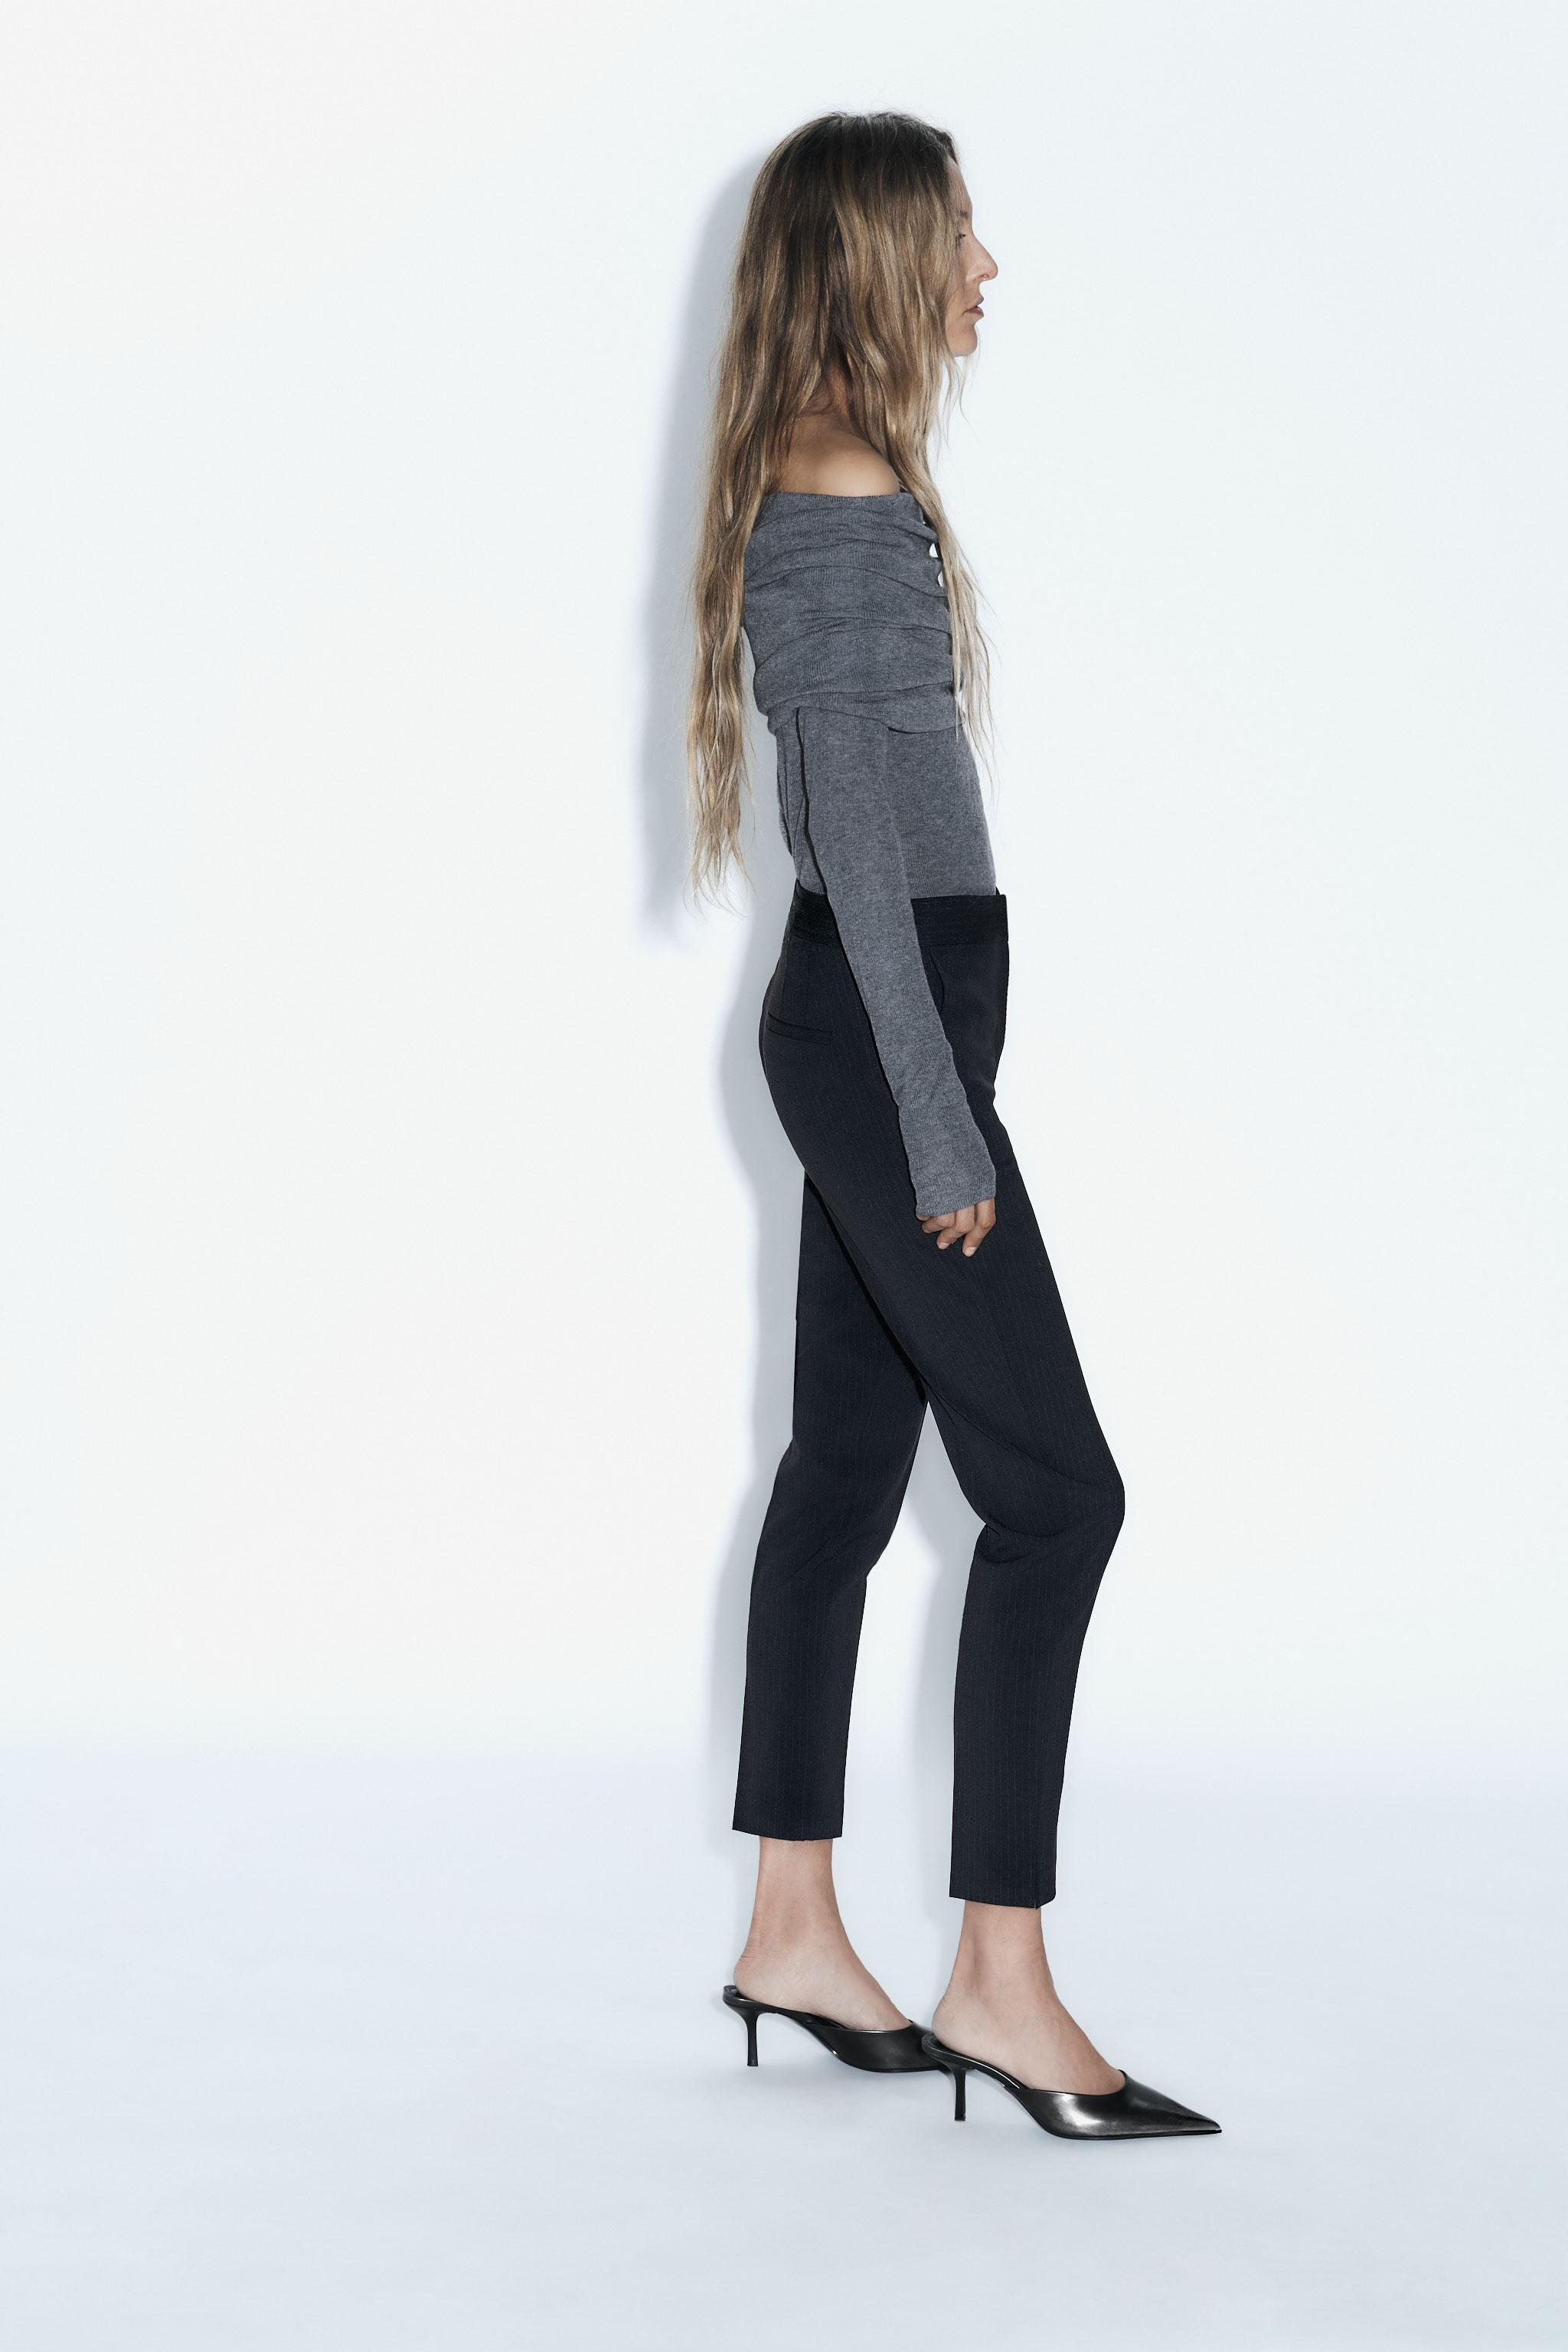 Zara, Pants & Jumpsuits, Zara High Rise Cropped Skinny Cigarette Trouser  Pants In Camel Brown